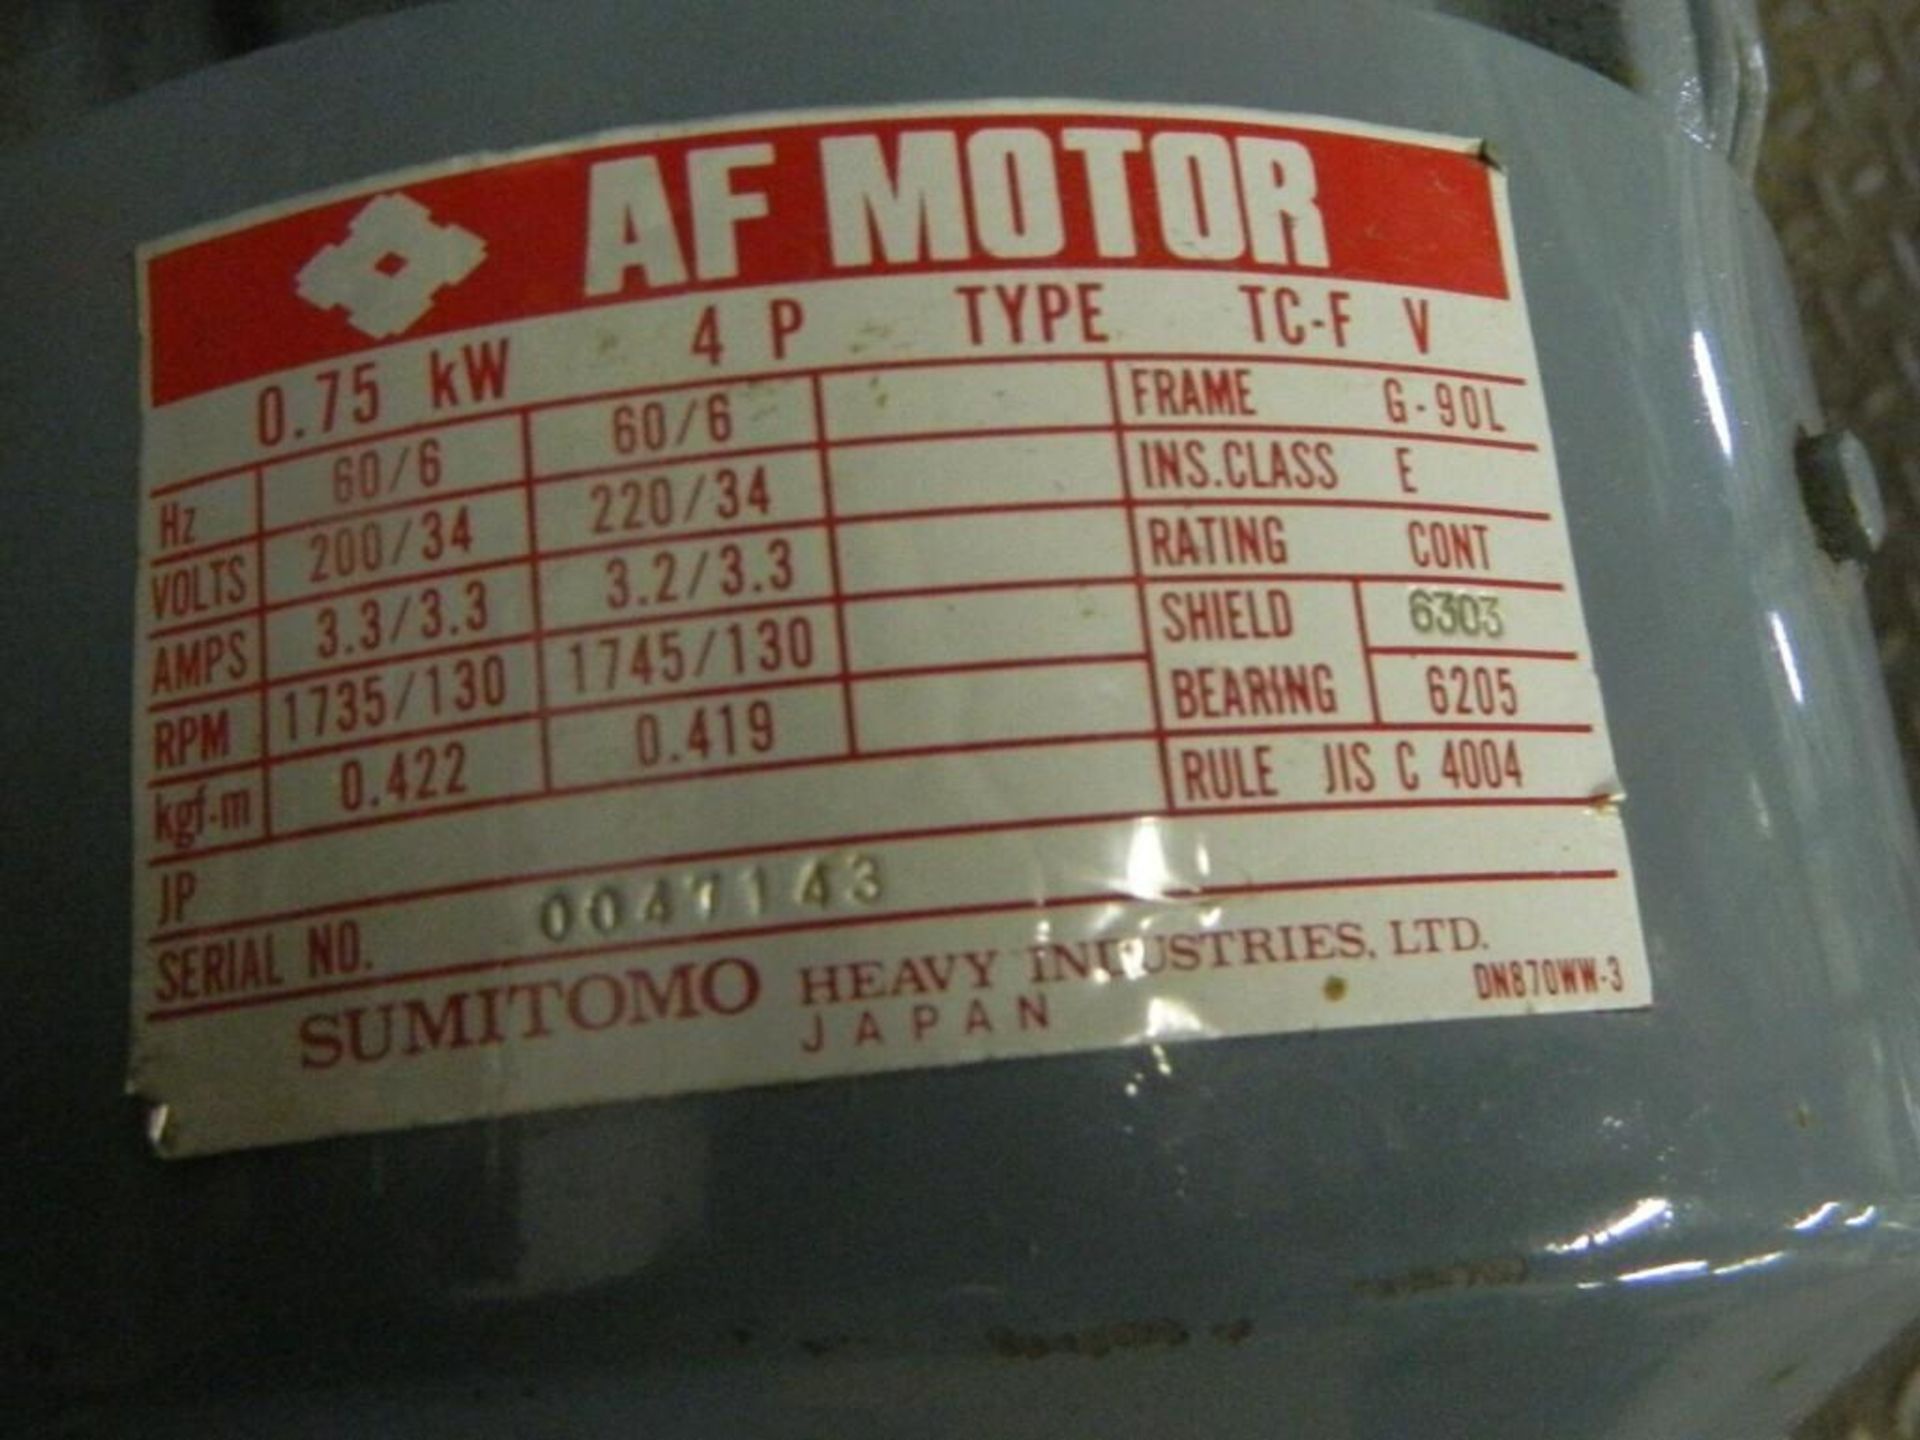 Lot of (3) Sumitomo 1 HP Motors, TC-F w/ Cyclo Drive 43:1 Ratio, #WMV1-210-AV - Image 4 of 5